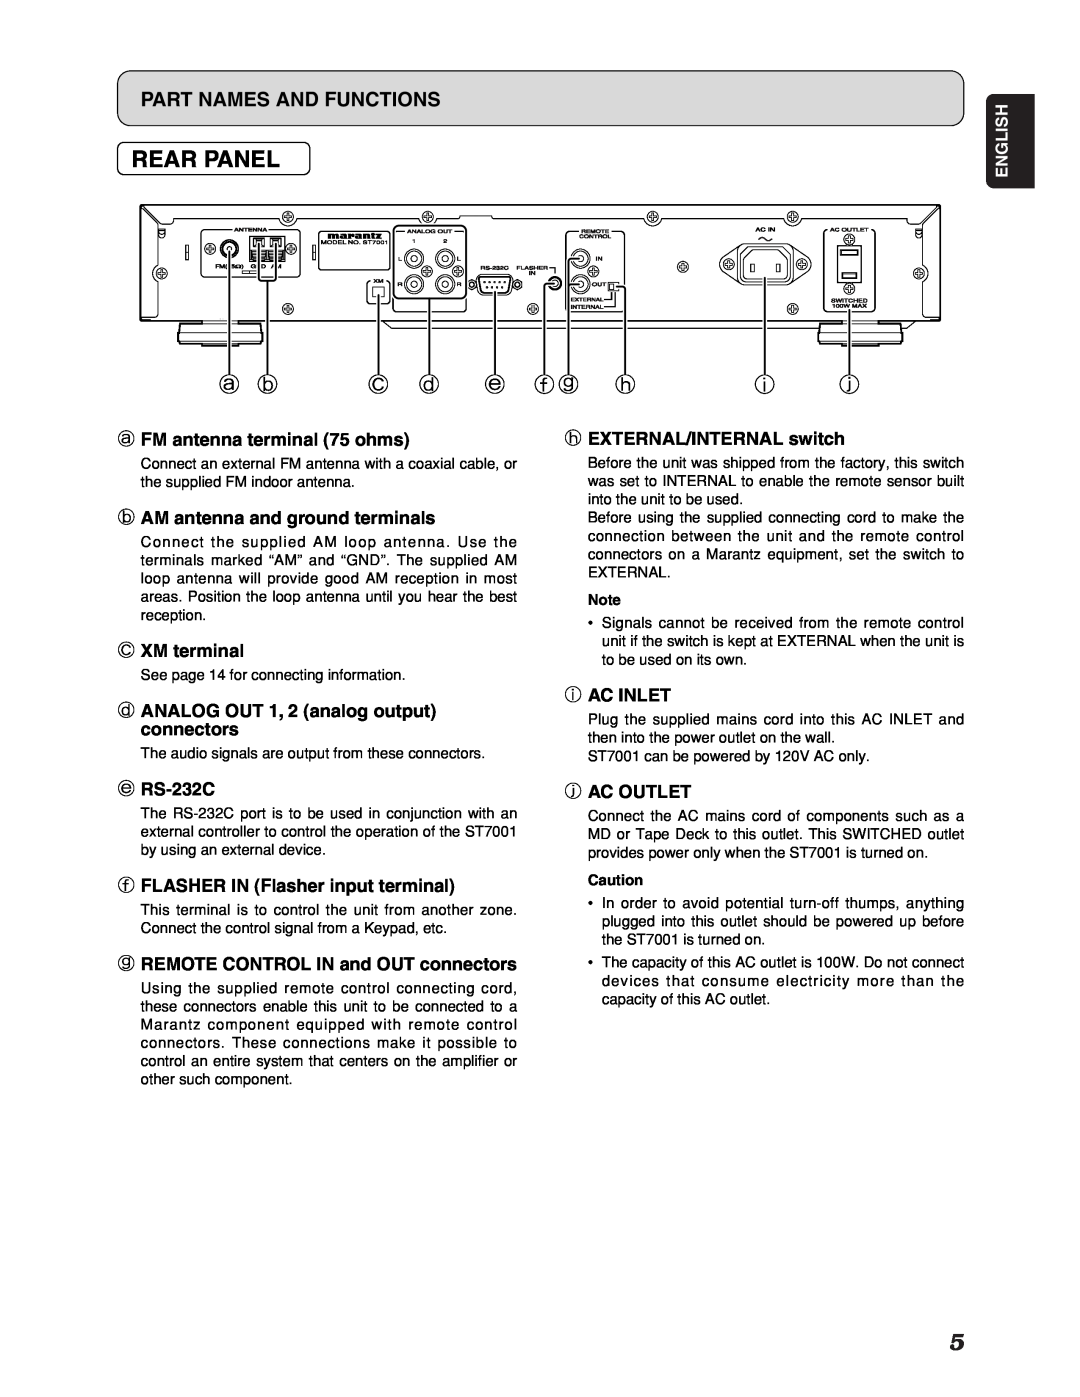 Marantz ST7001 manual Rear Panel, c d e fg h, Part Names And Functions 